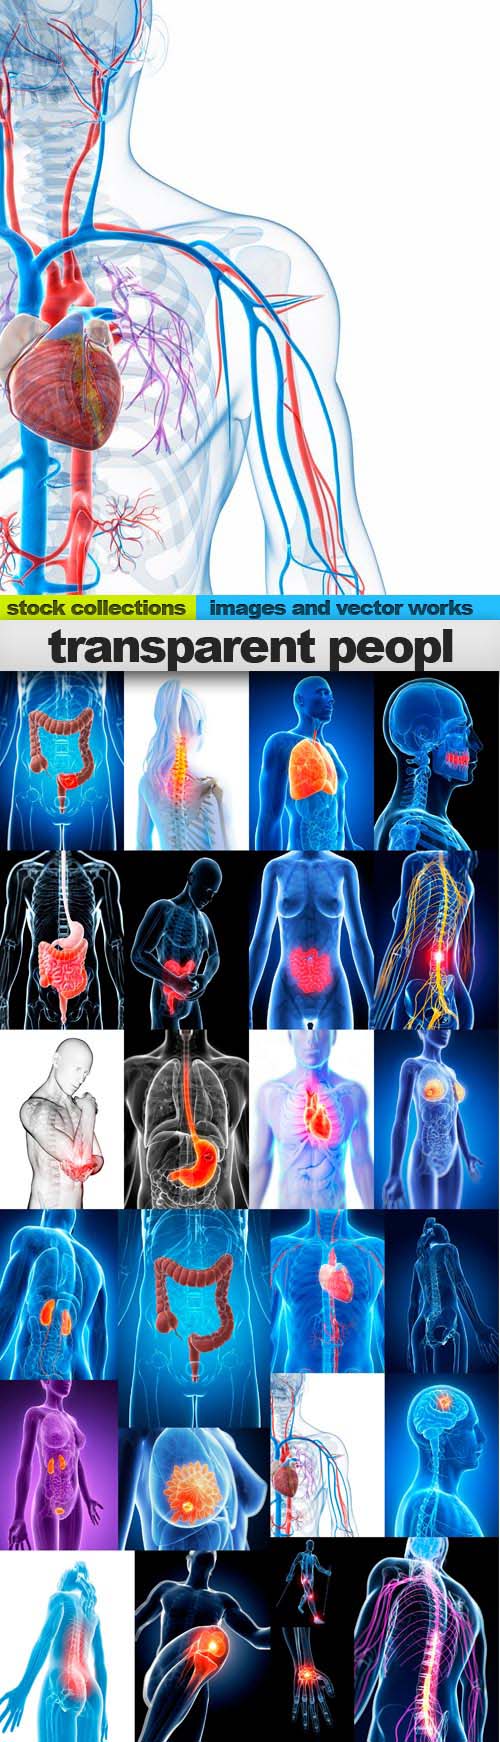 Transparent people, 25 x UHQ JPEG